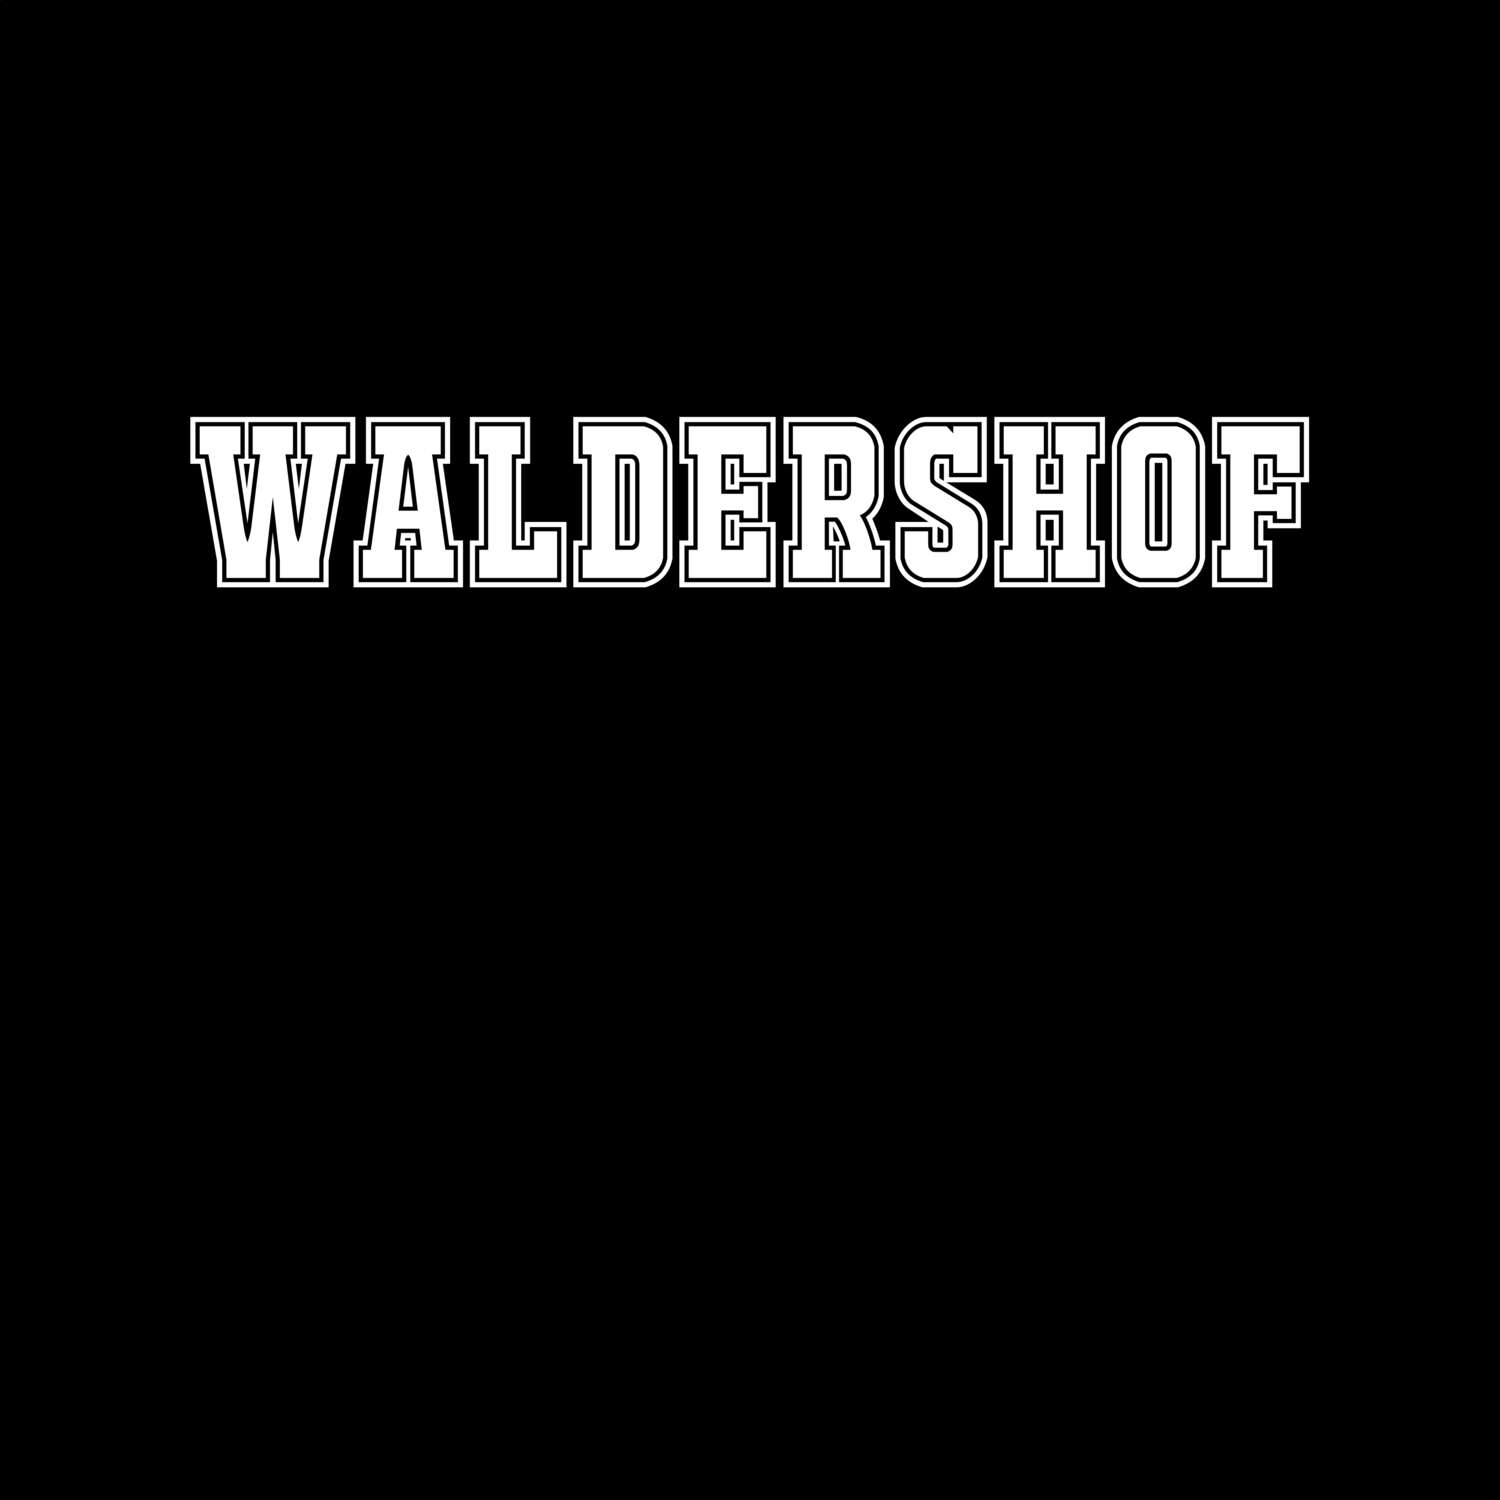 Waldershof T-Shirt »Classic«